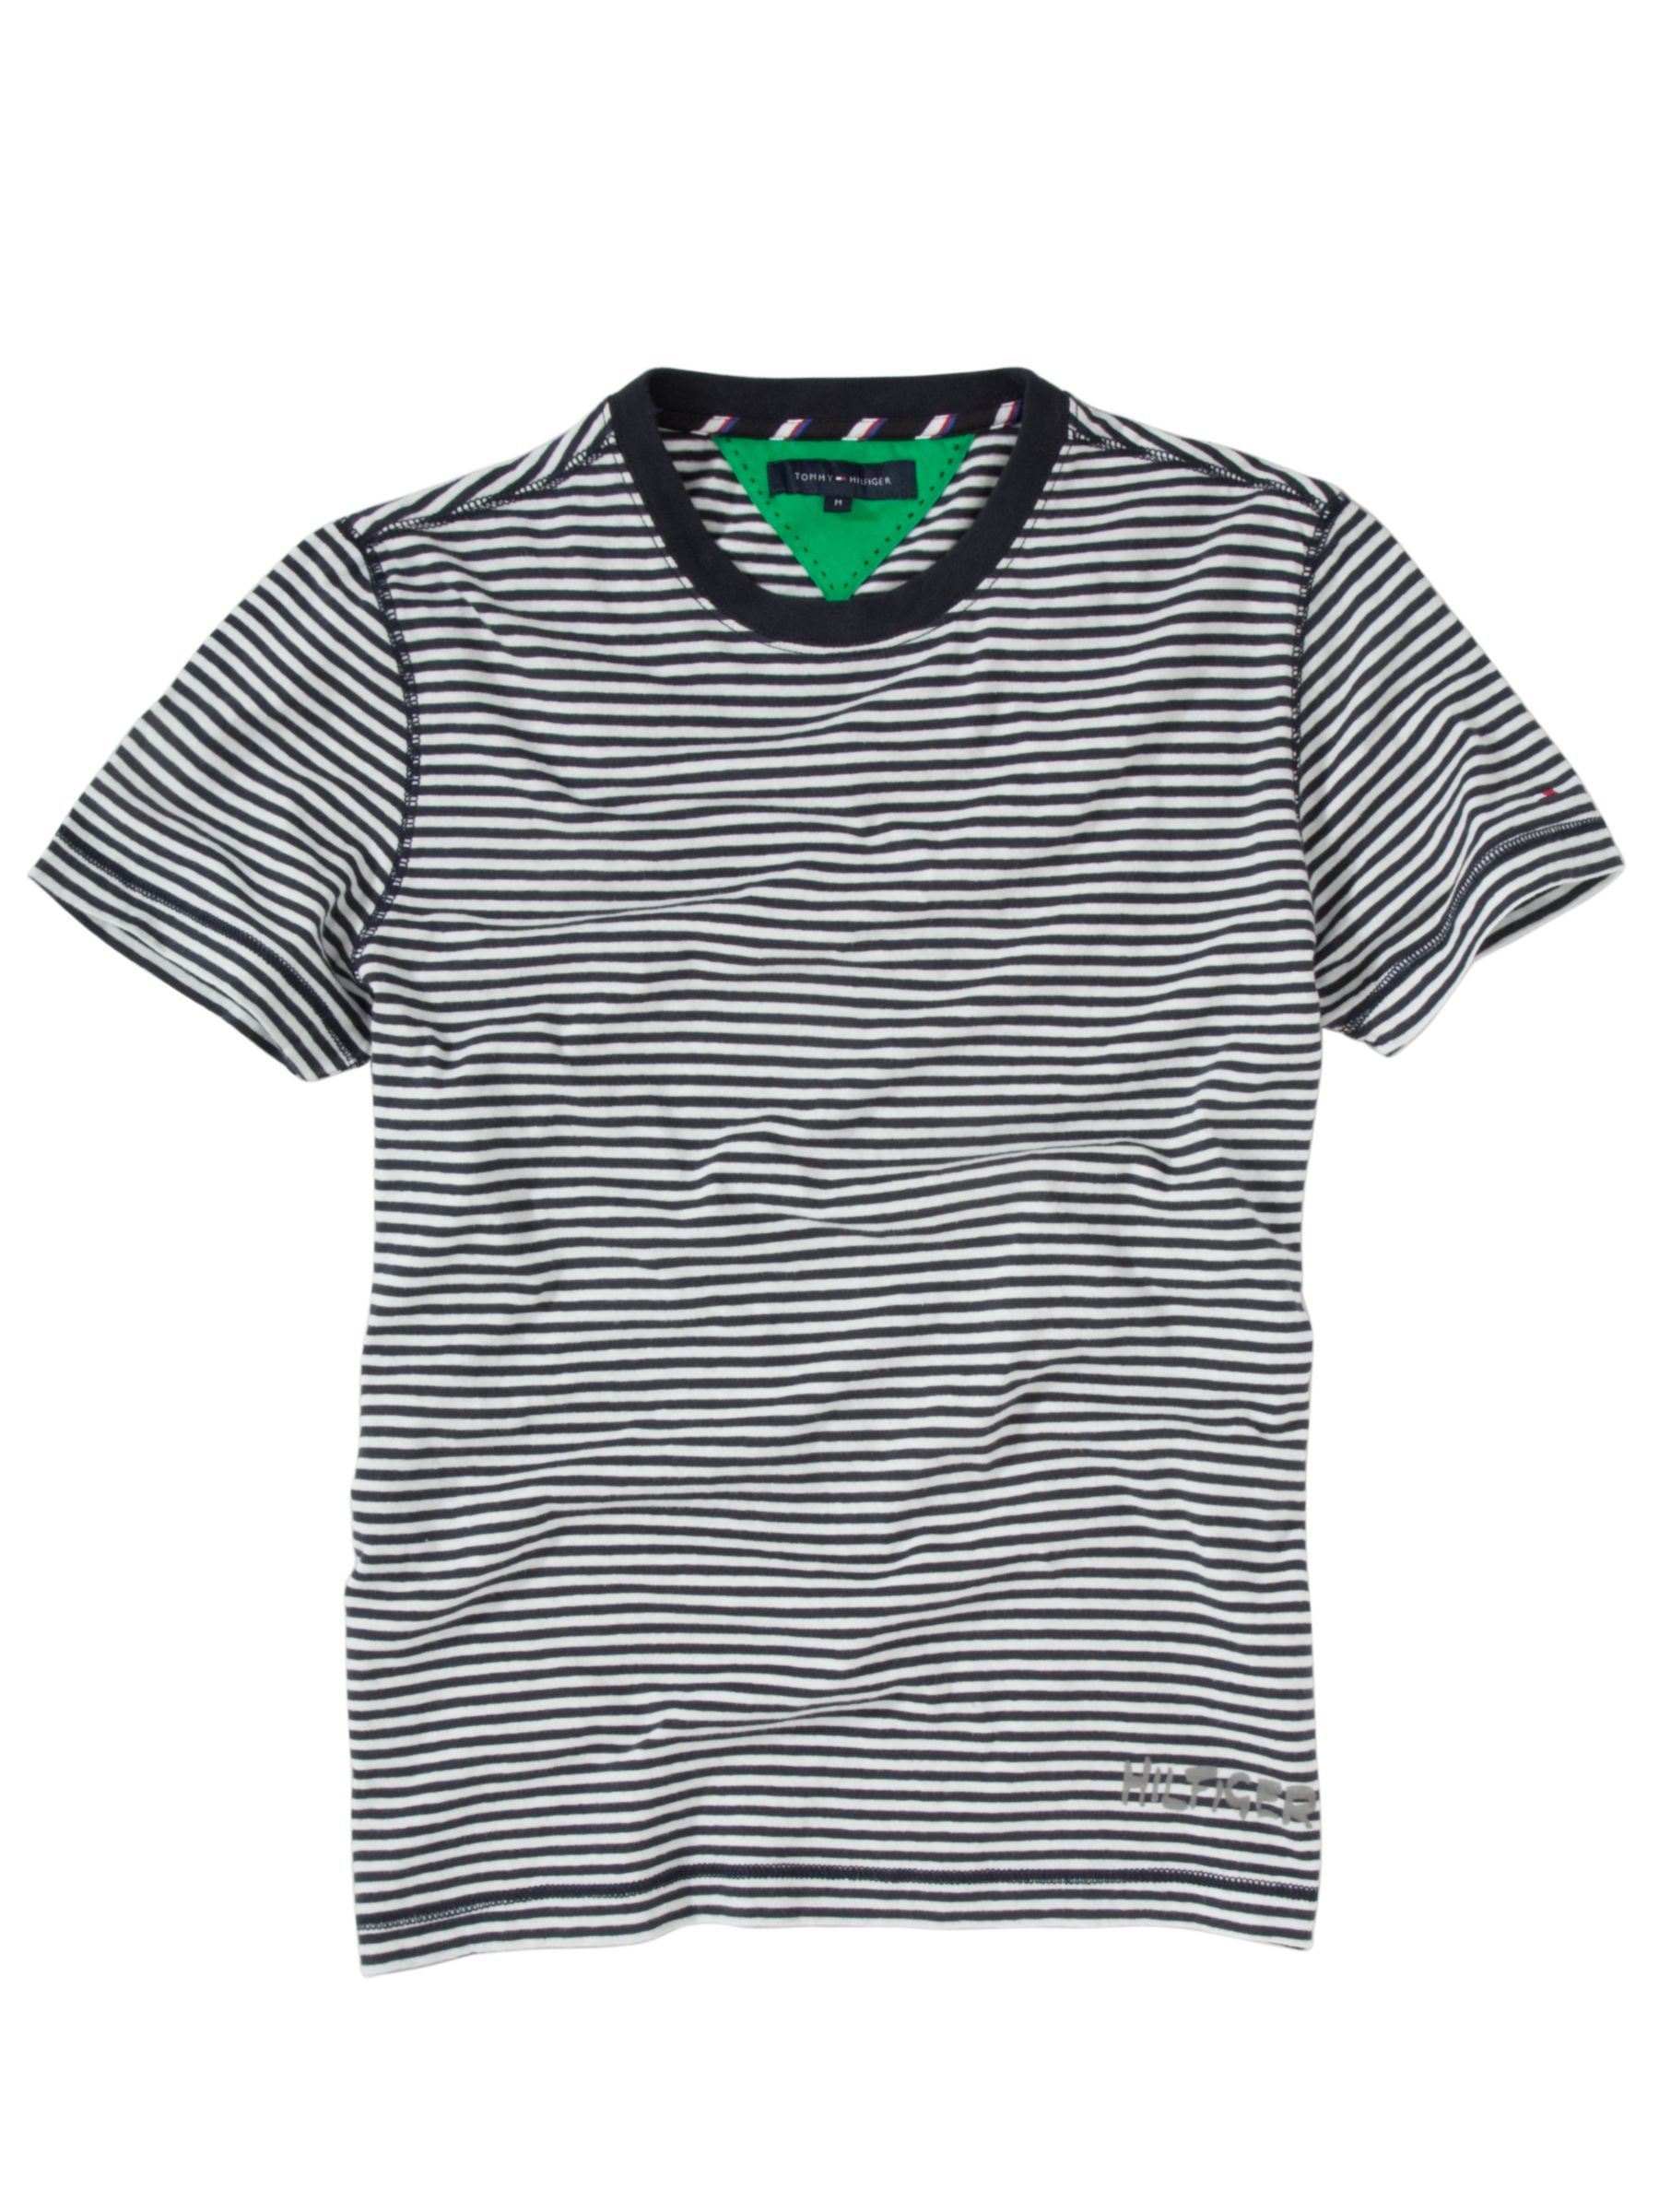 Tommy Hilfiger Thin Stripe T-Shirt, Navy